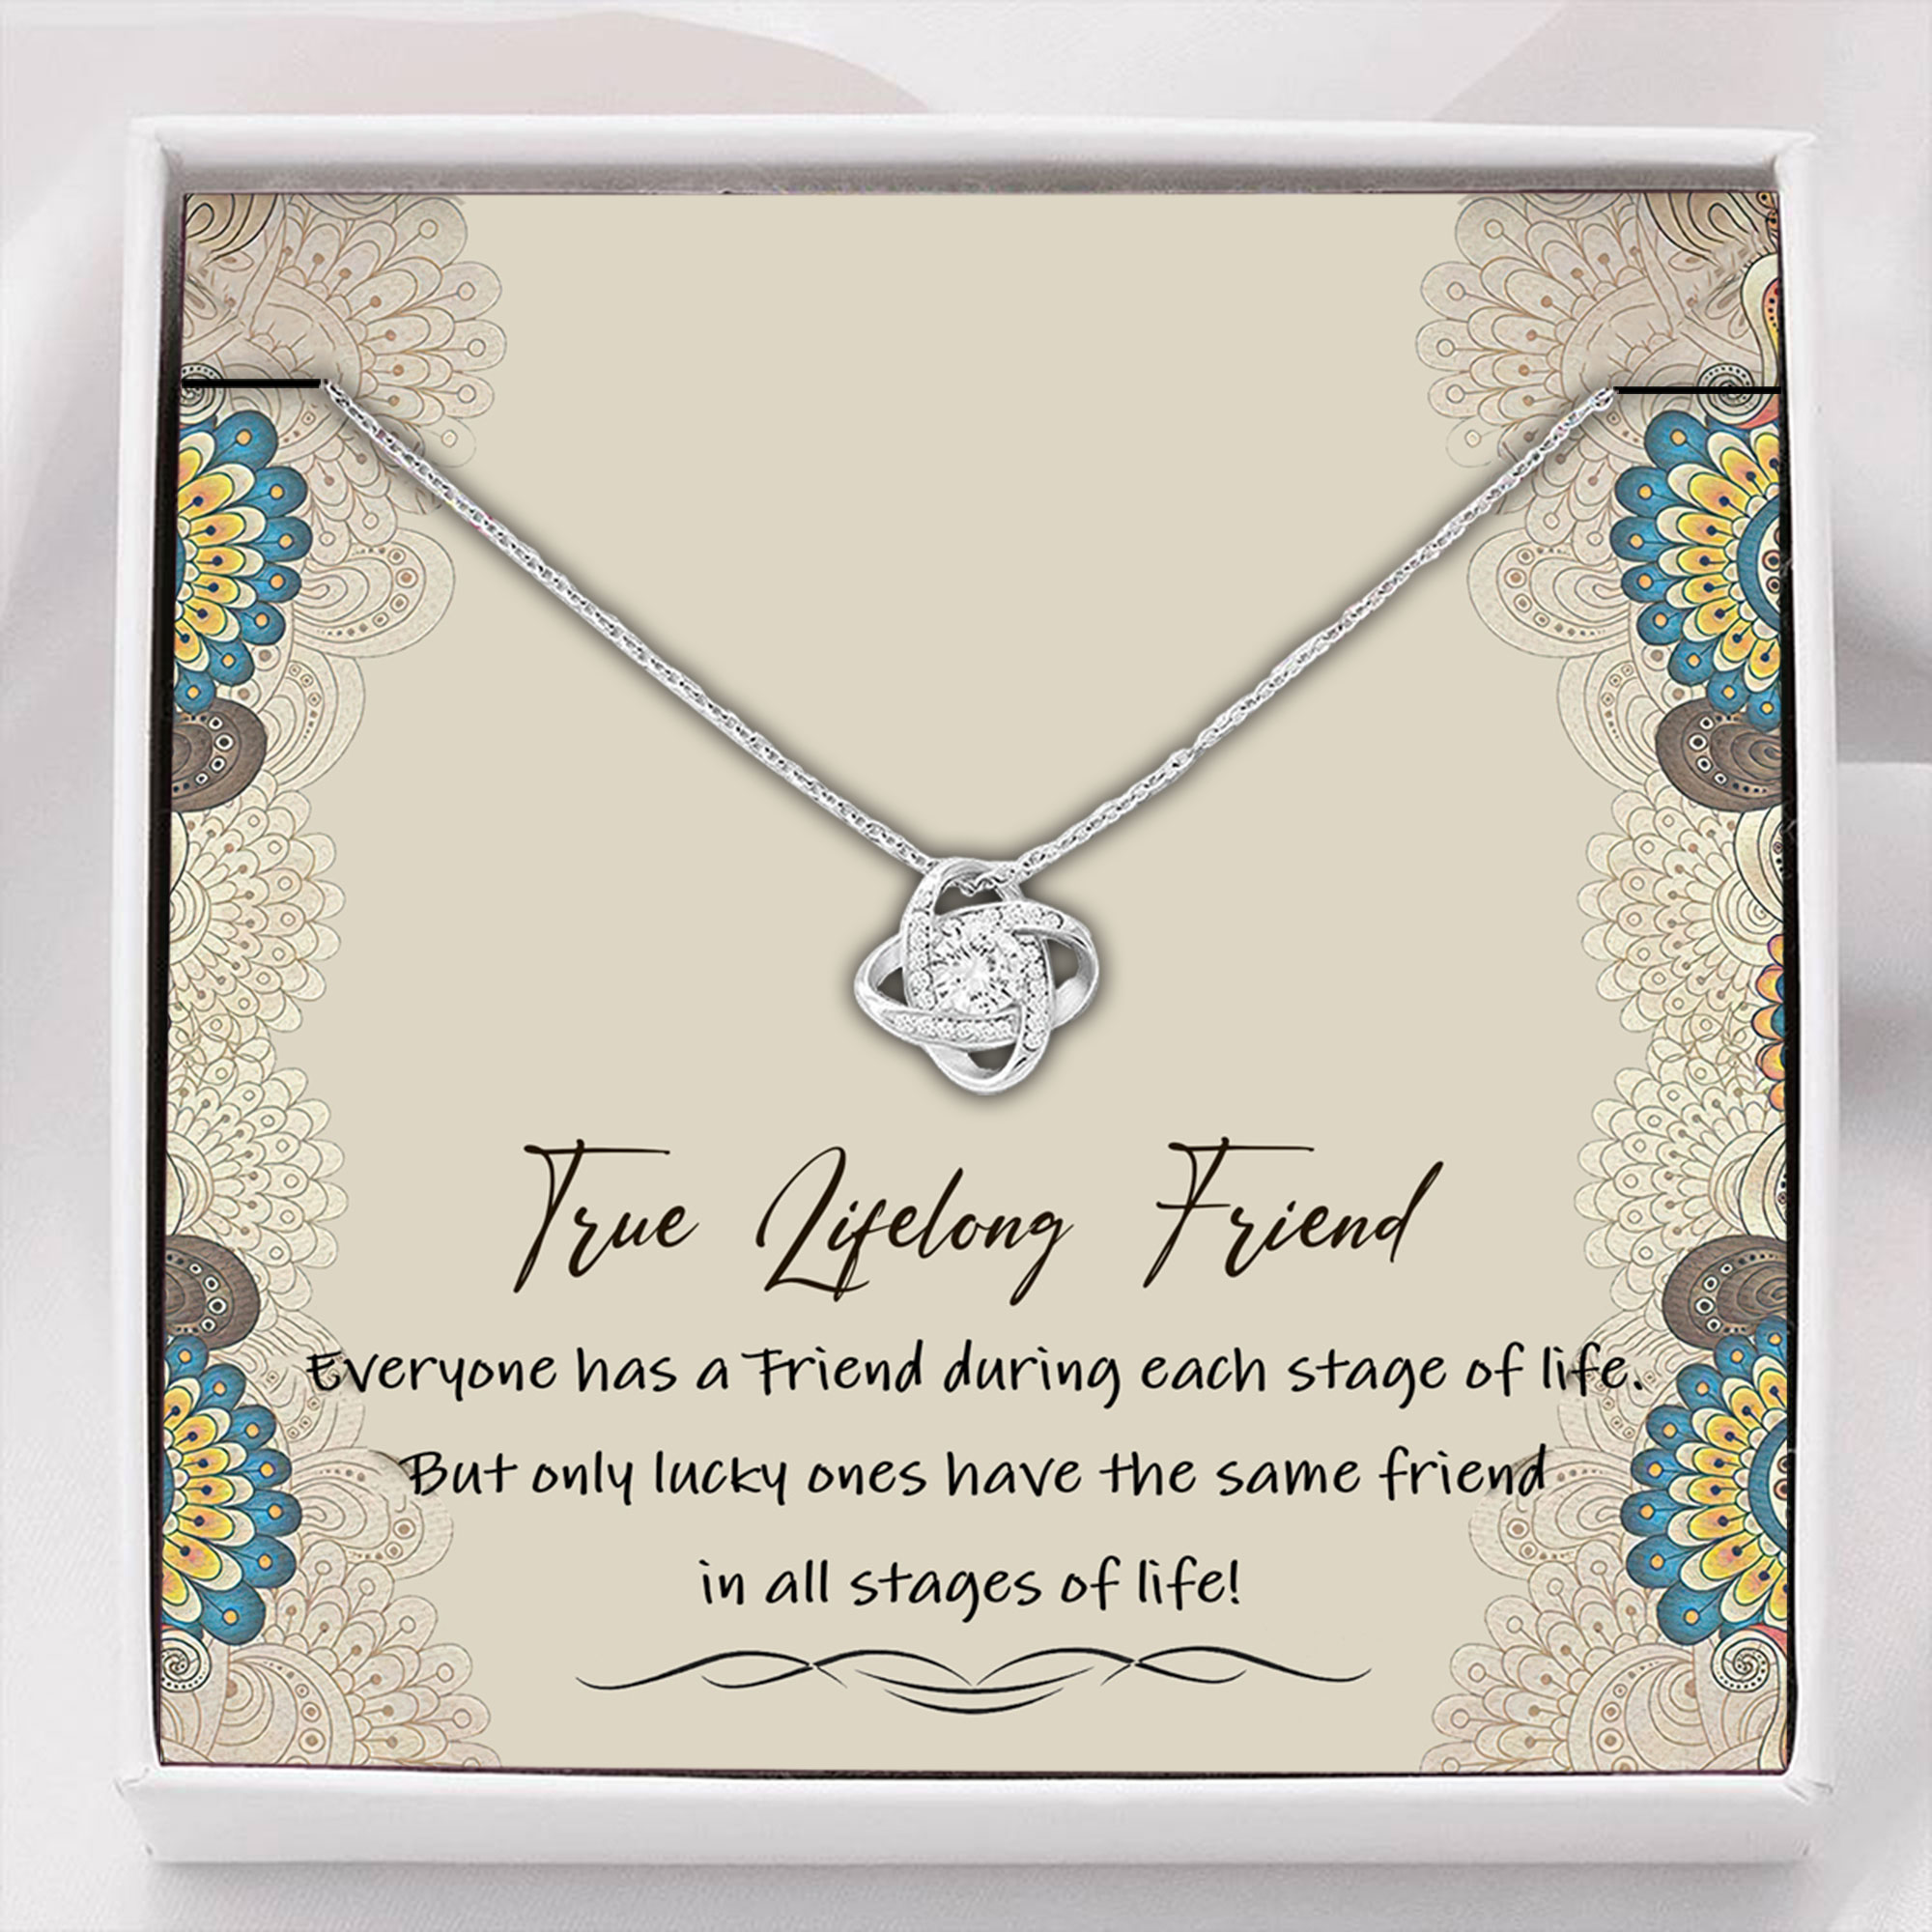 Best Friend Necklace Gift - True Lifelong Friend Necklace